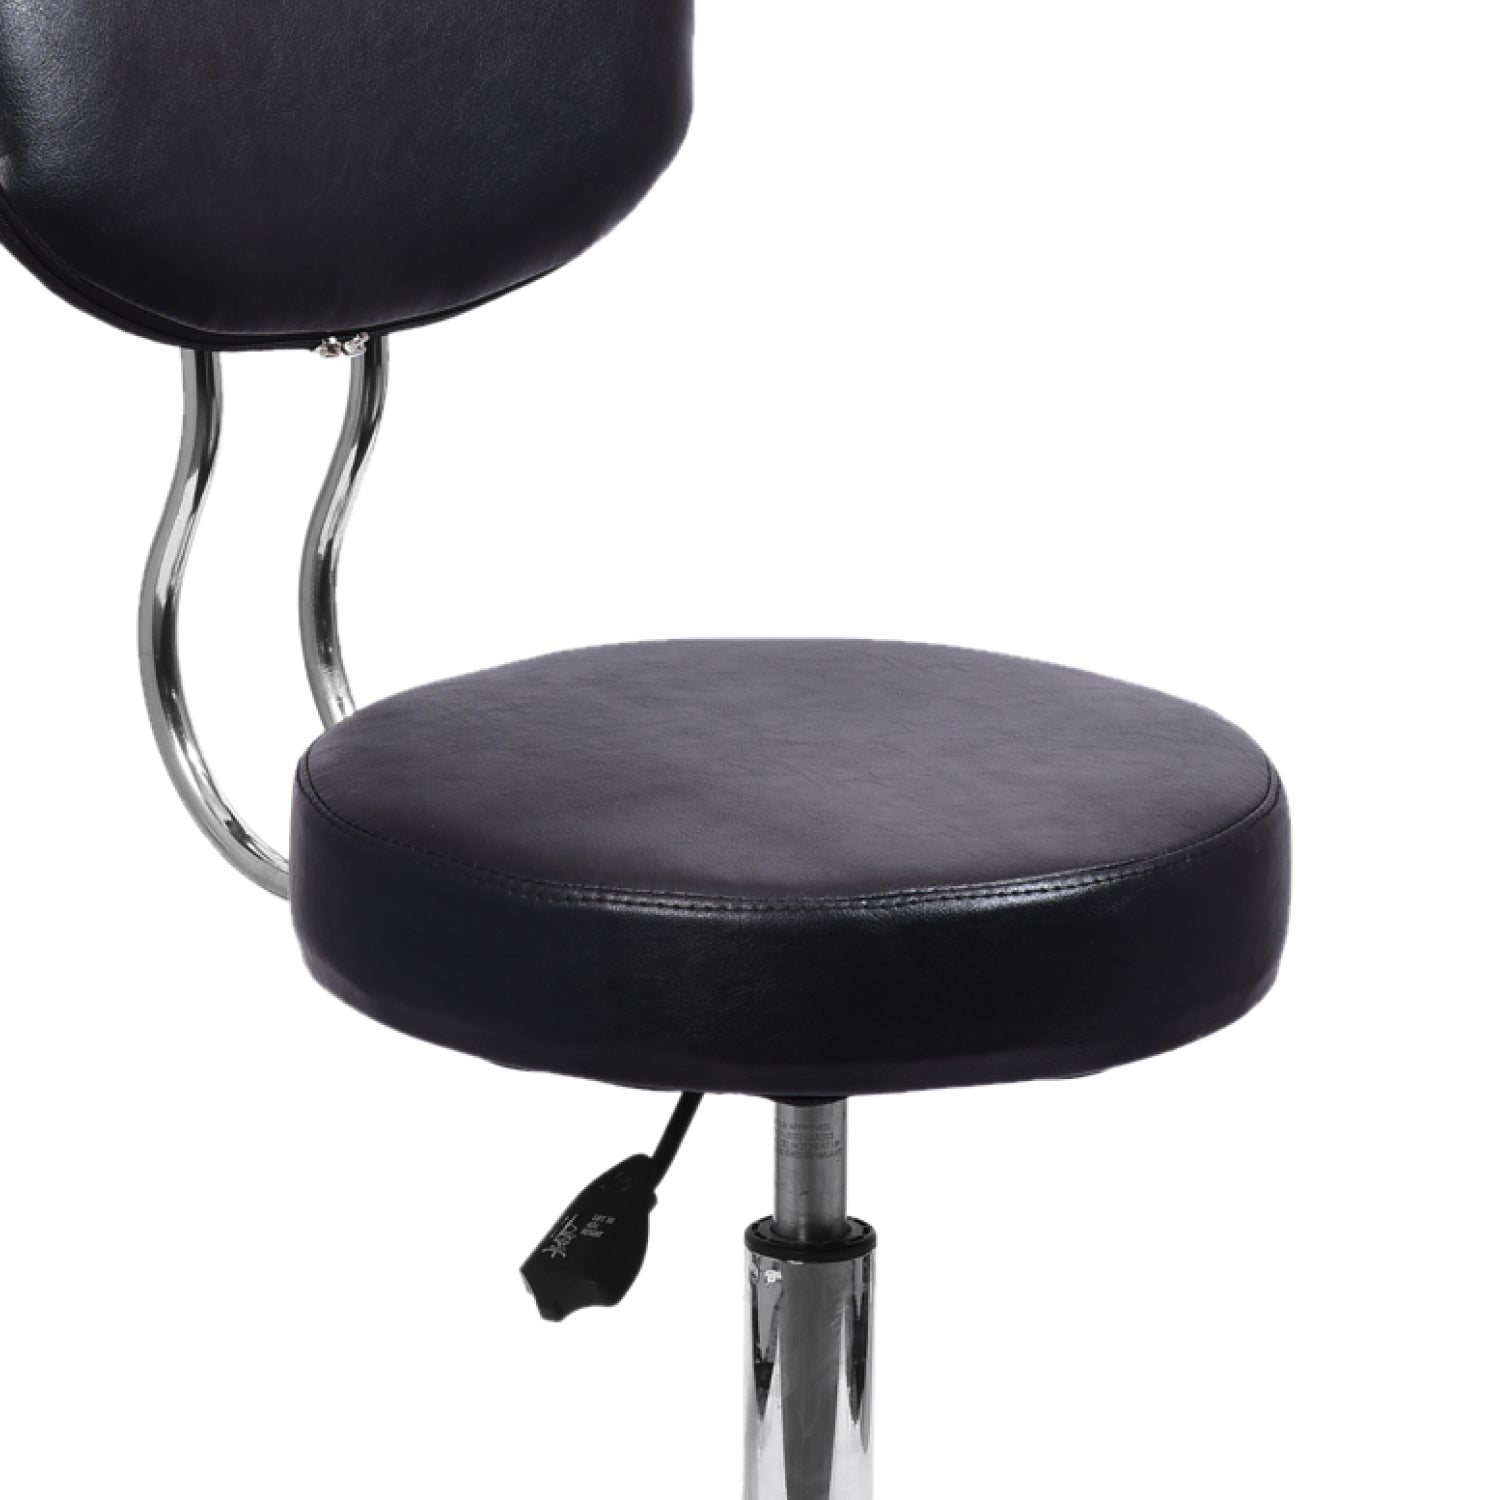 ZSV1062 Medium Back Chair by Zorin in Black Color Zorin